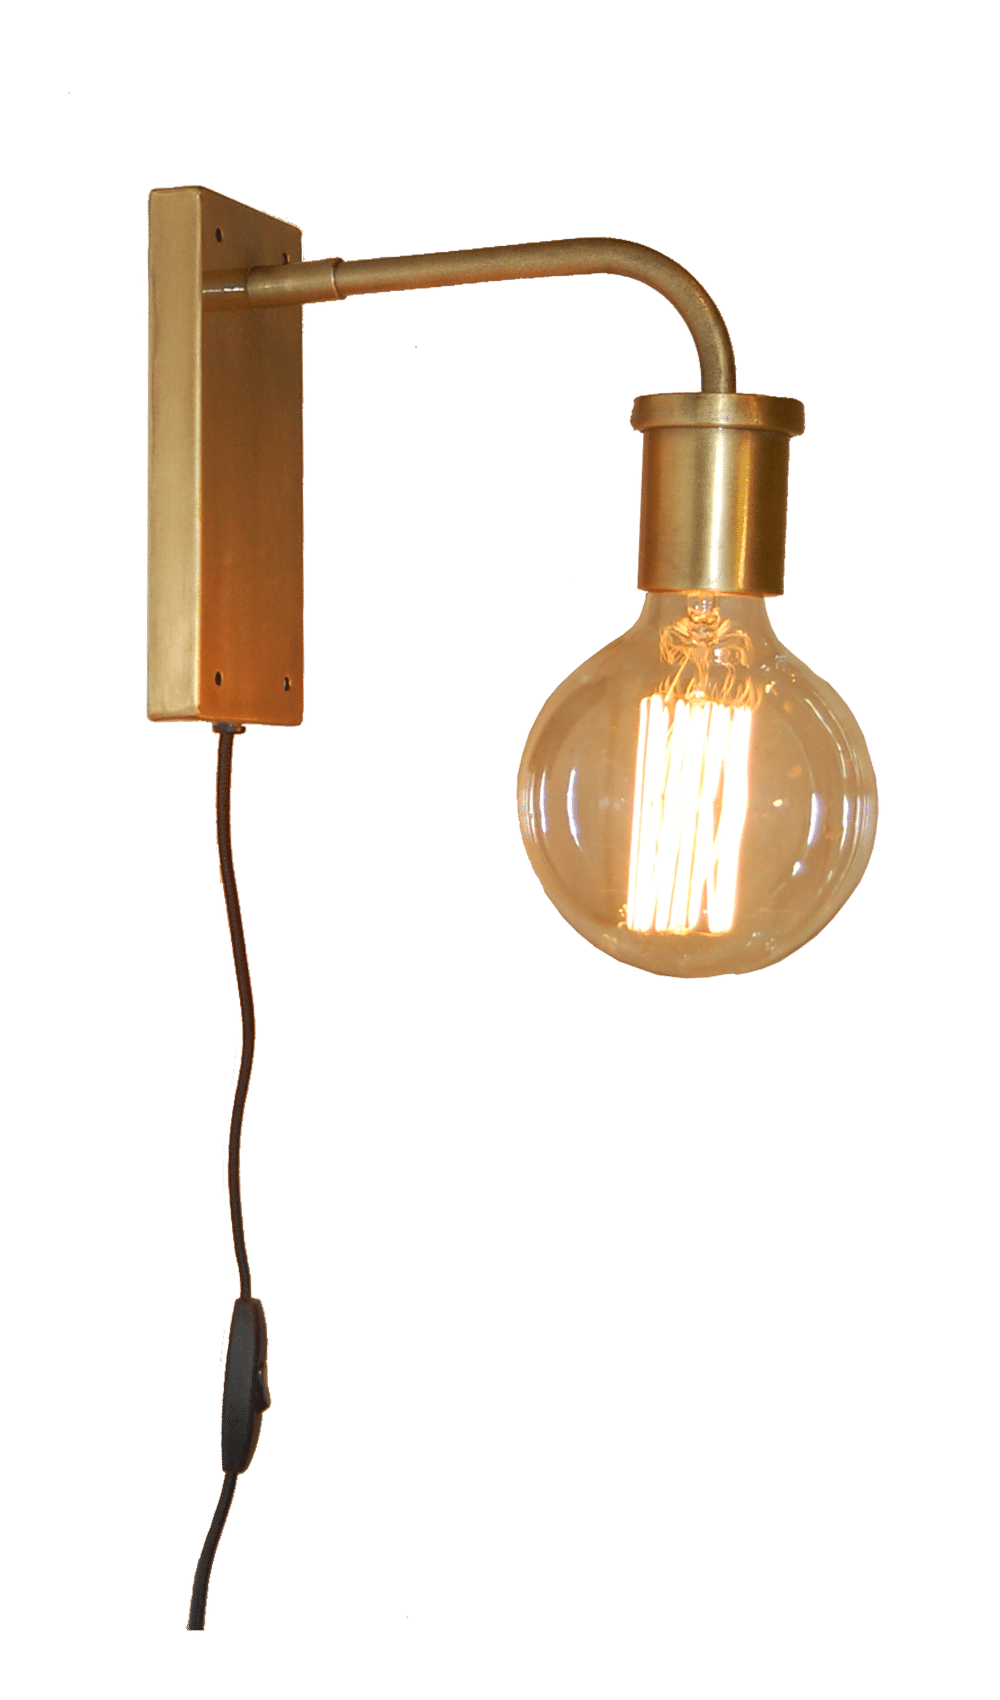 Trademark Living Lucas væglampe i et enkelt design - messing